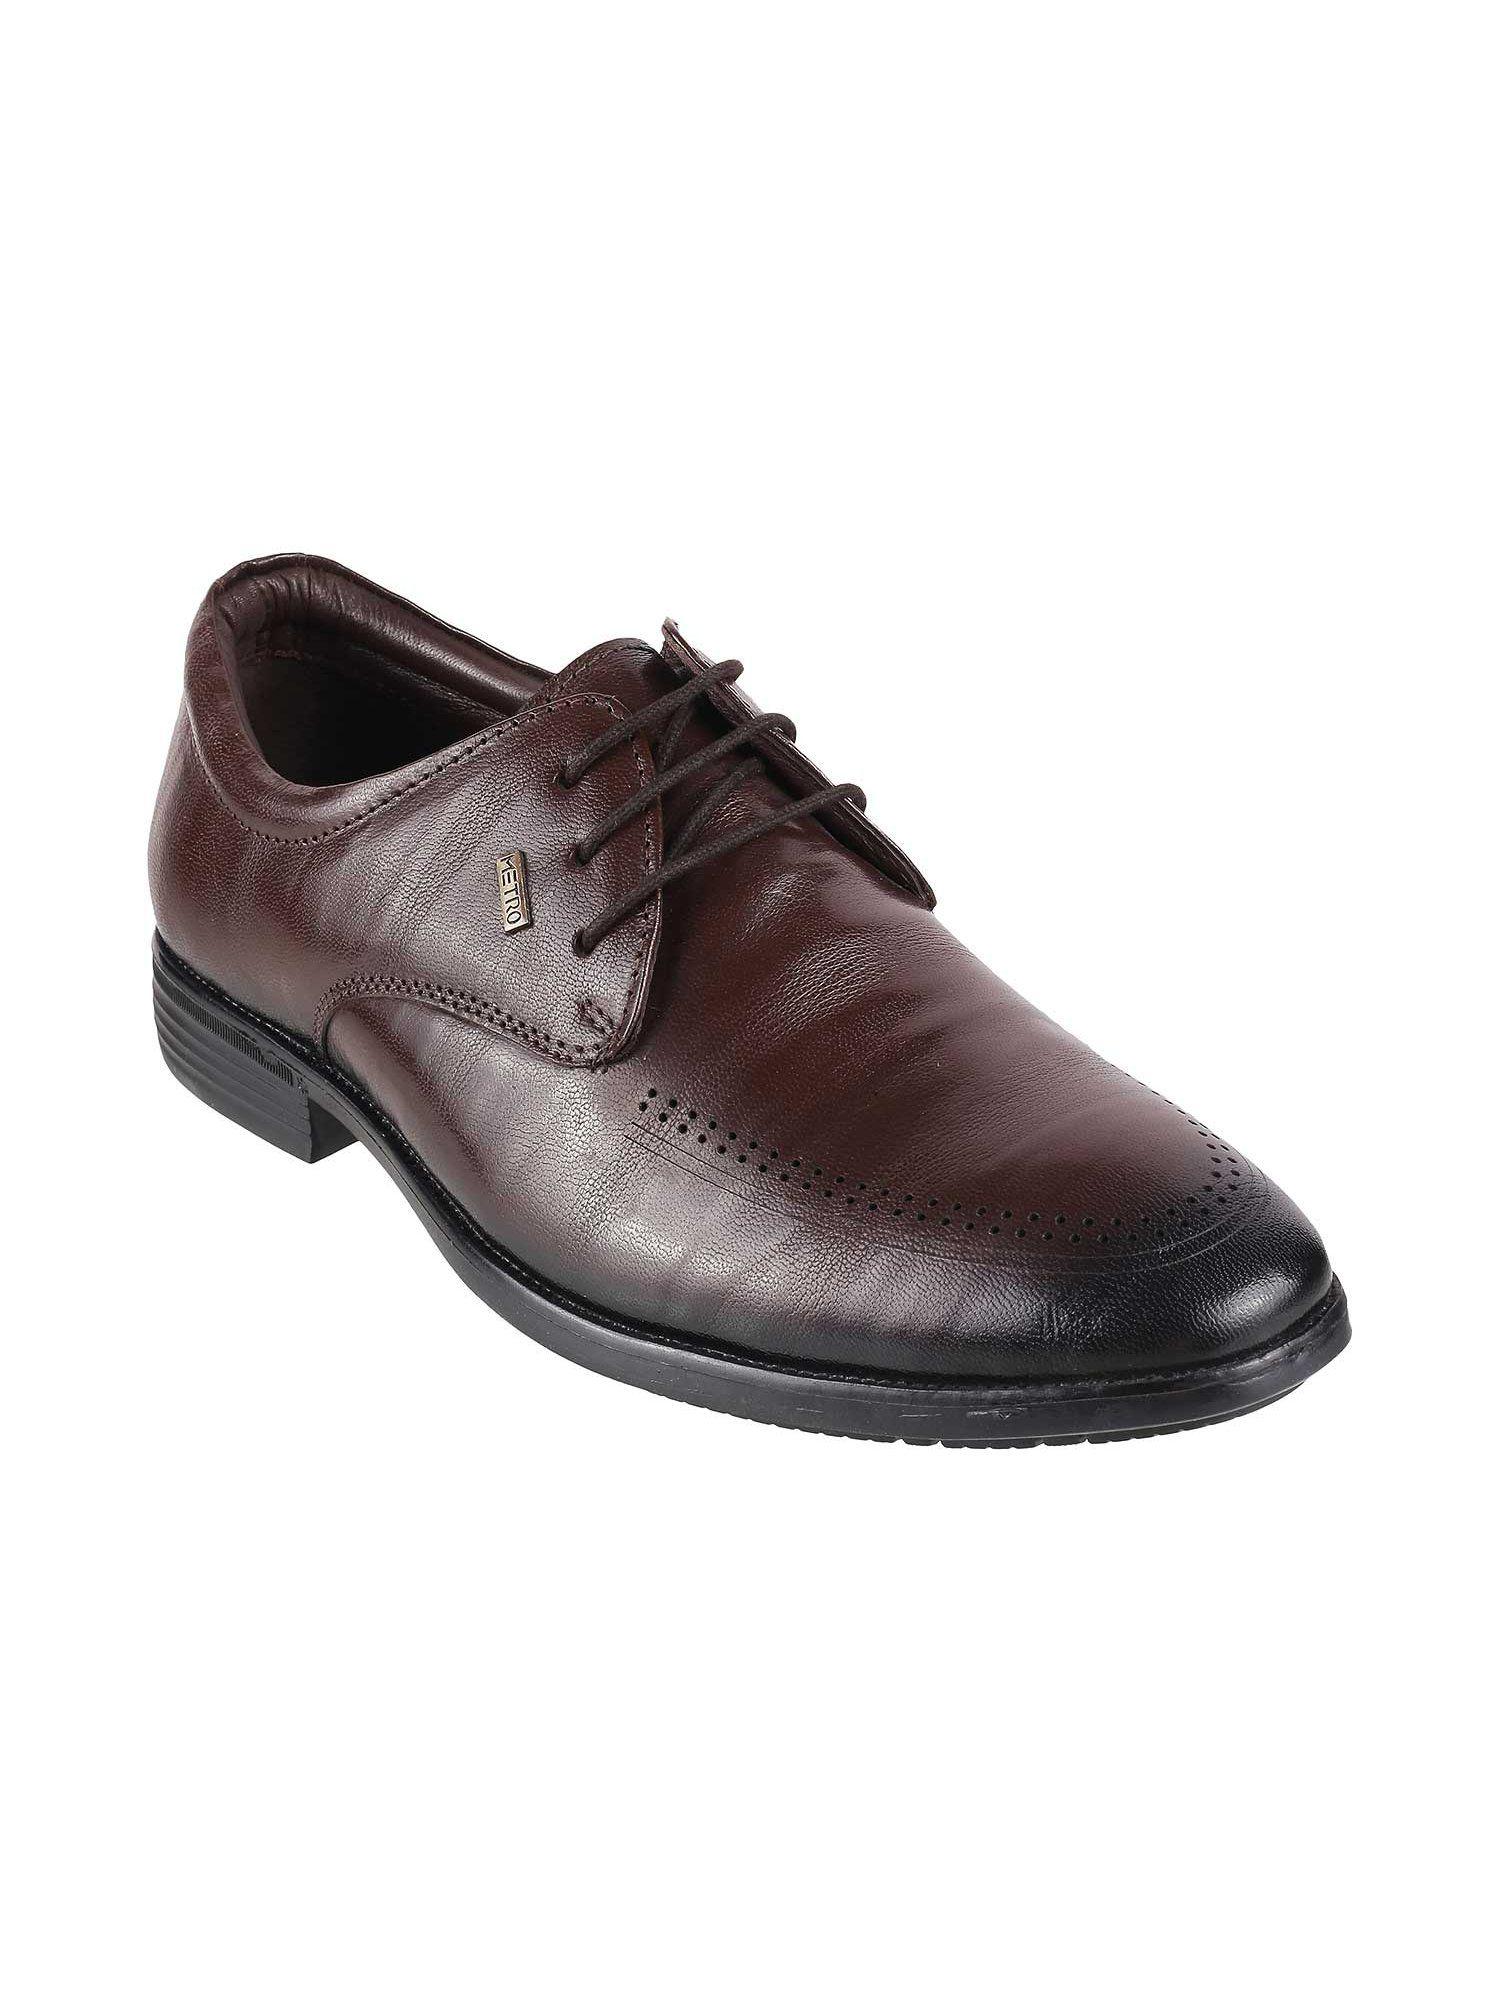 metro mens brown formal lace-ups shoesmochi plain brown lace-ups shoes